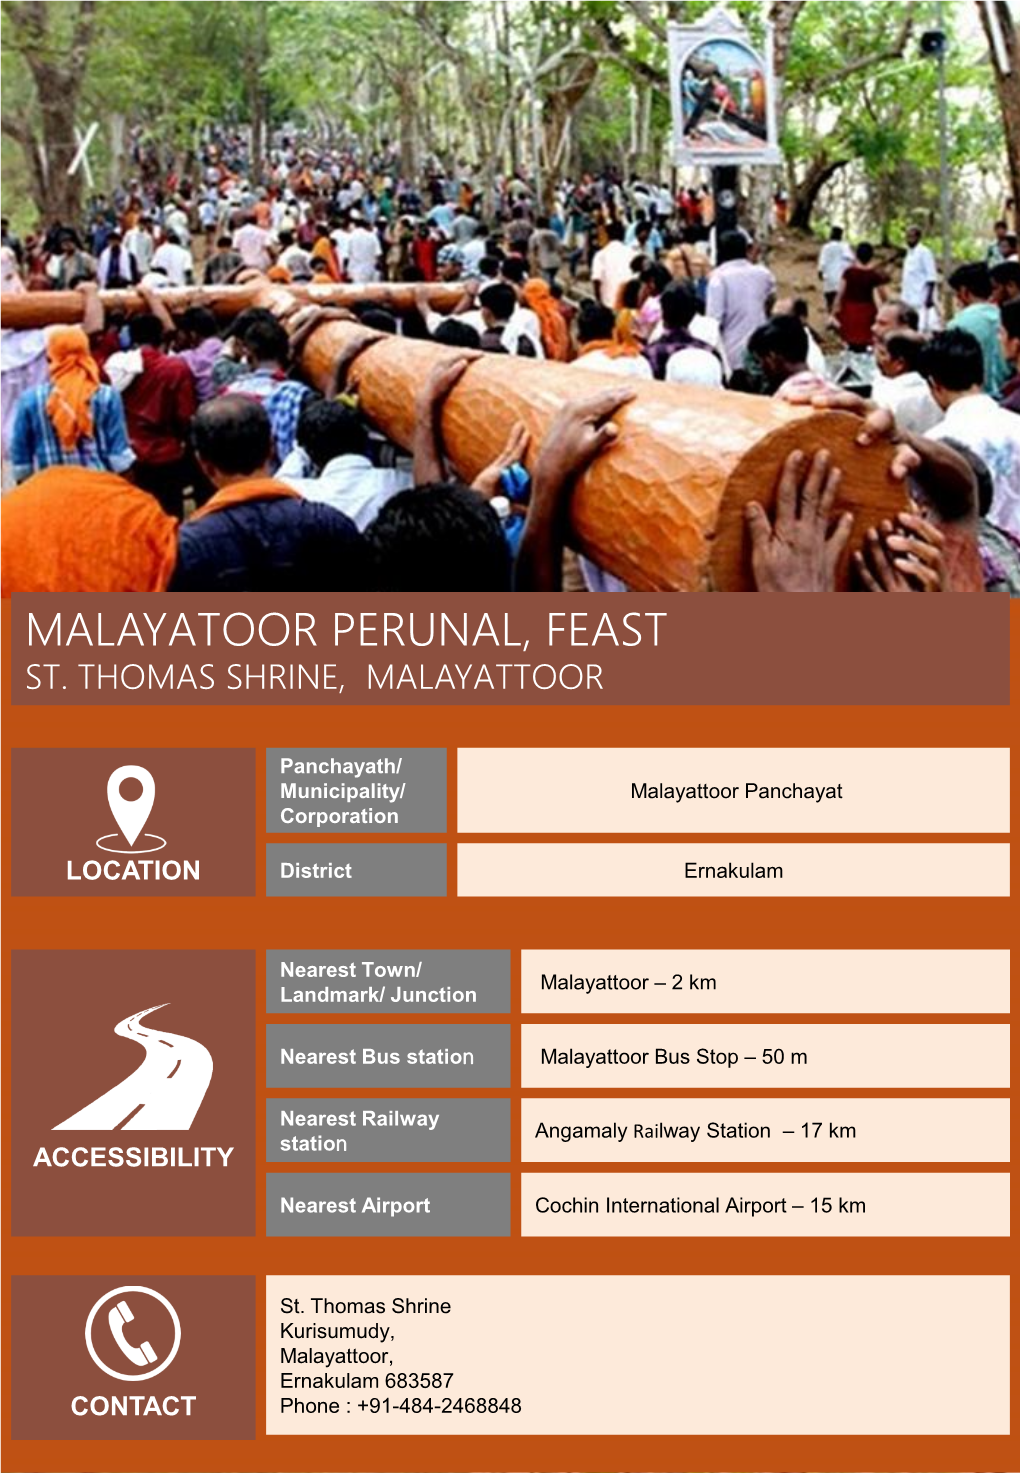 Malayatoor Perunal, Feast St